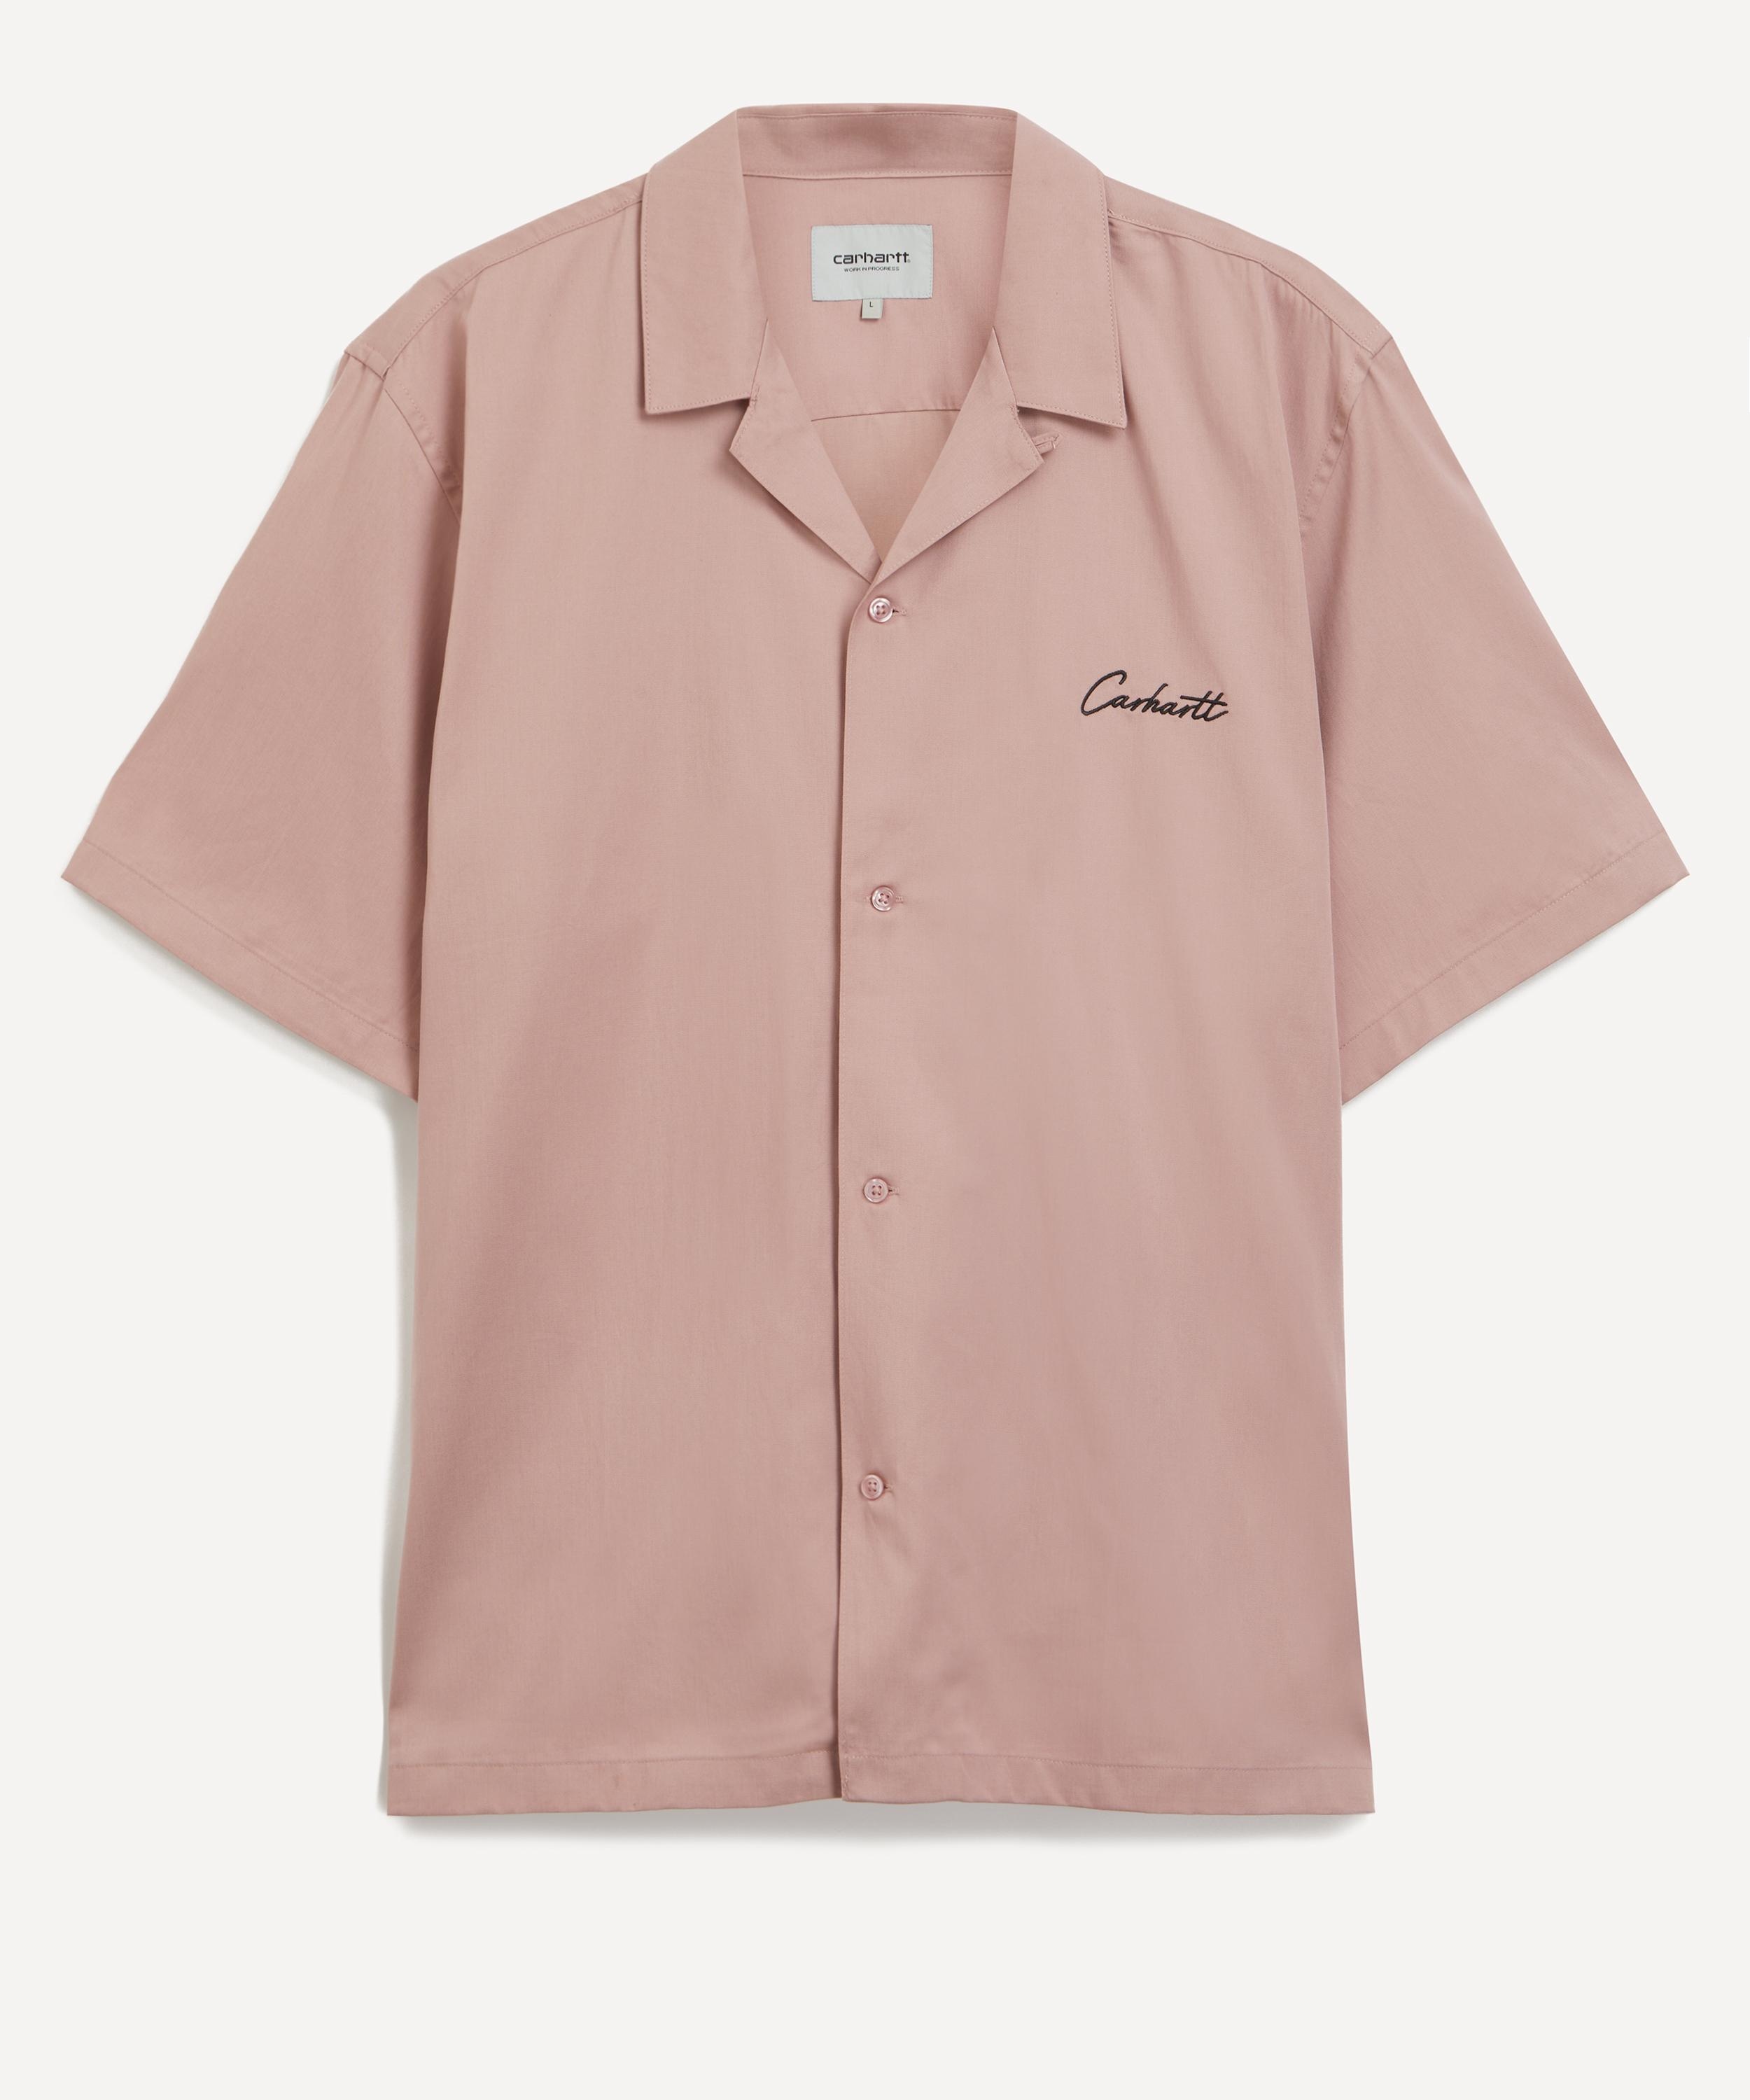 SS Delray Glassy Pink Bowling Shirt - 1